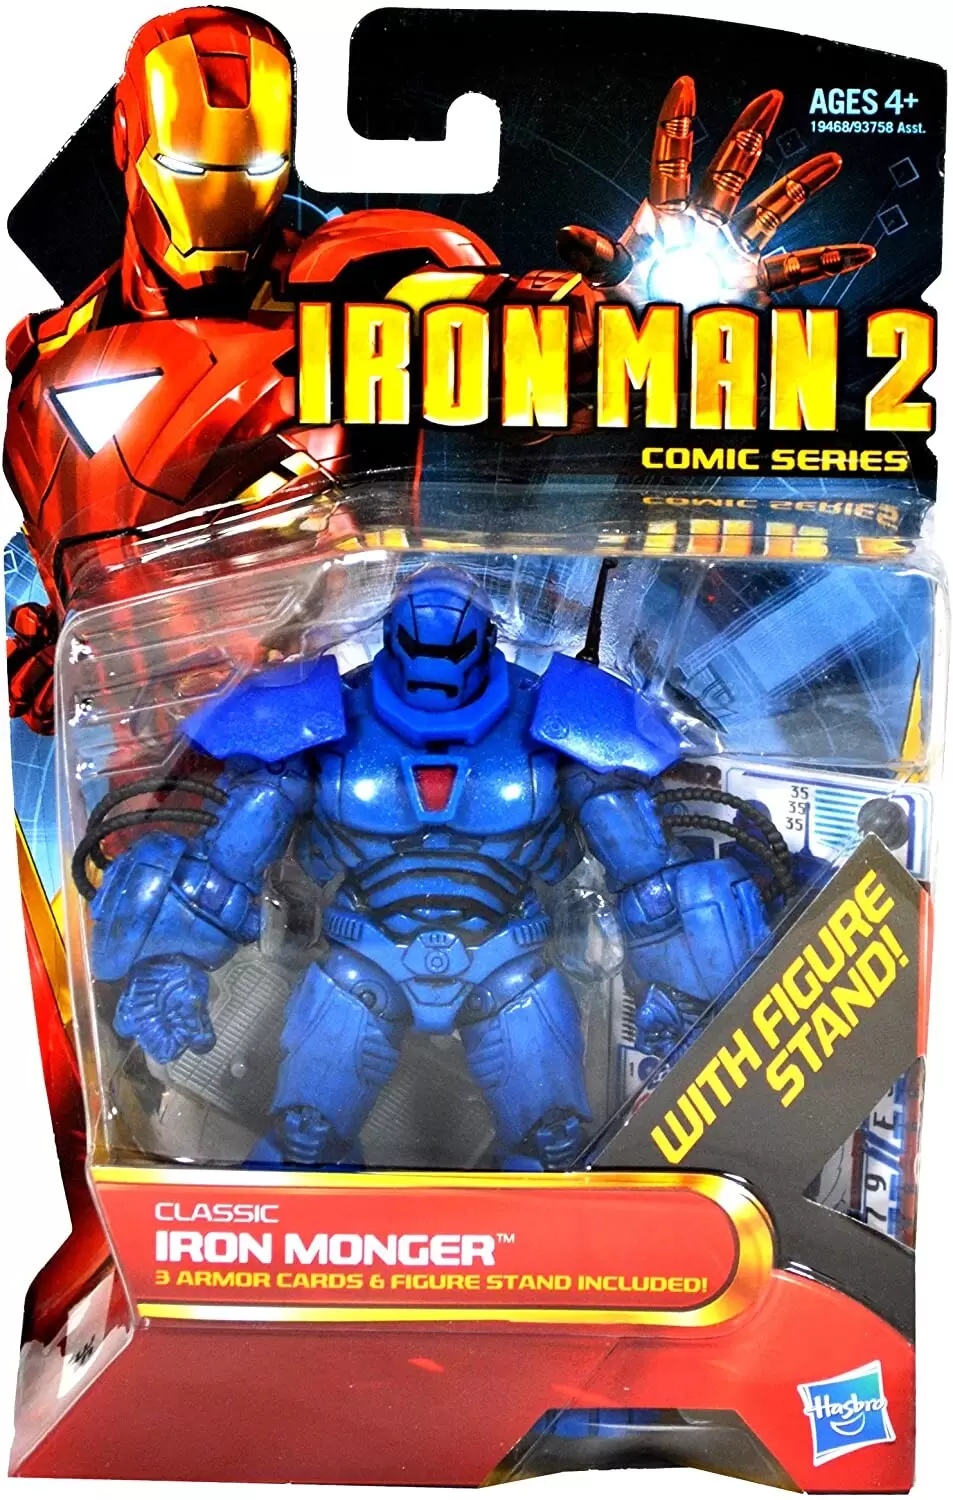 Iron Man 2 - Movie & Comic Series - Classic Iron Monger